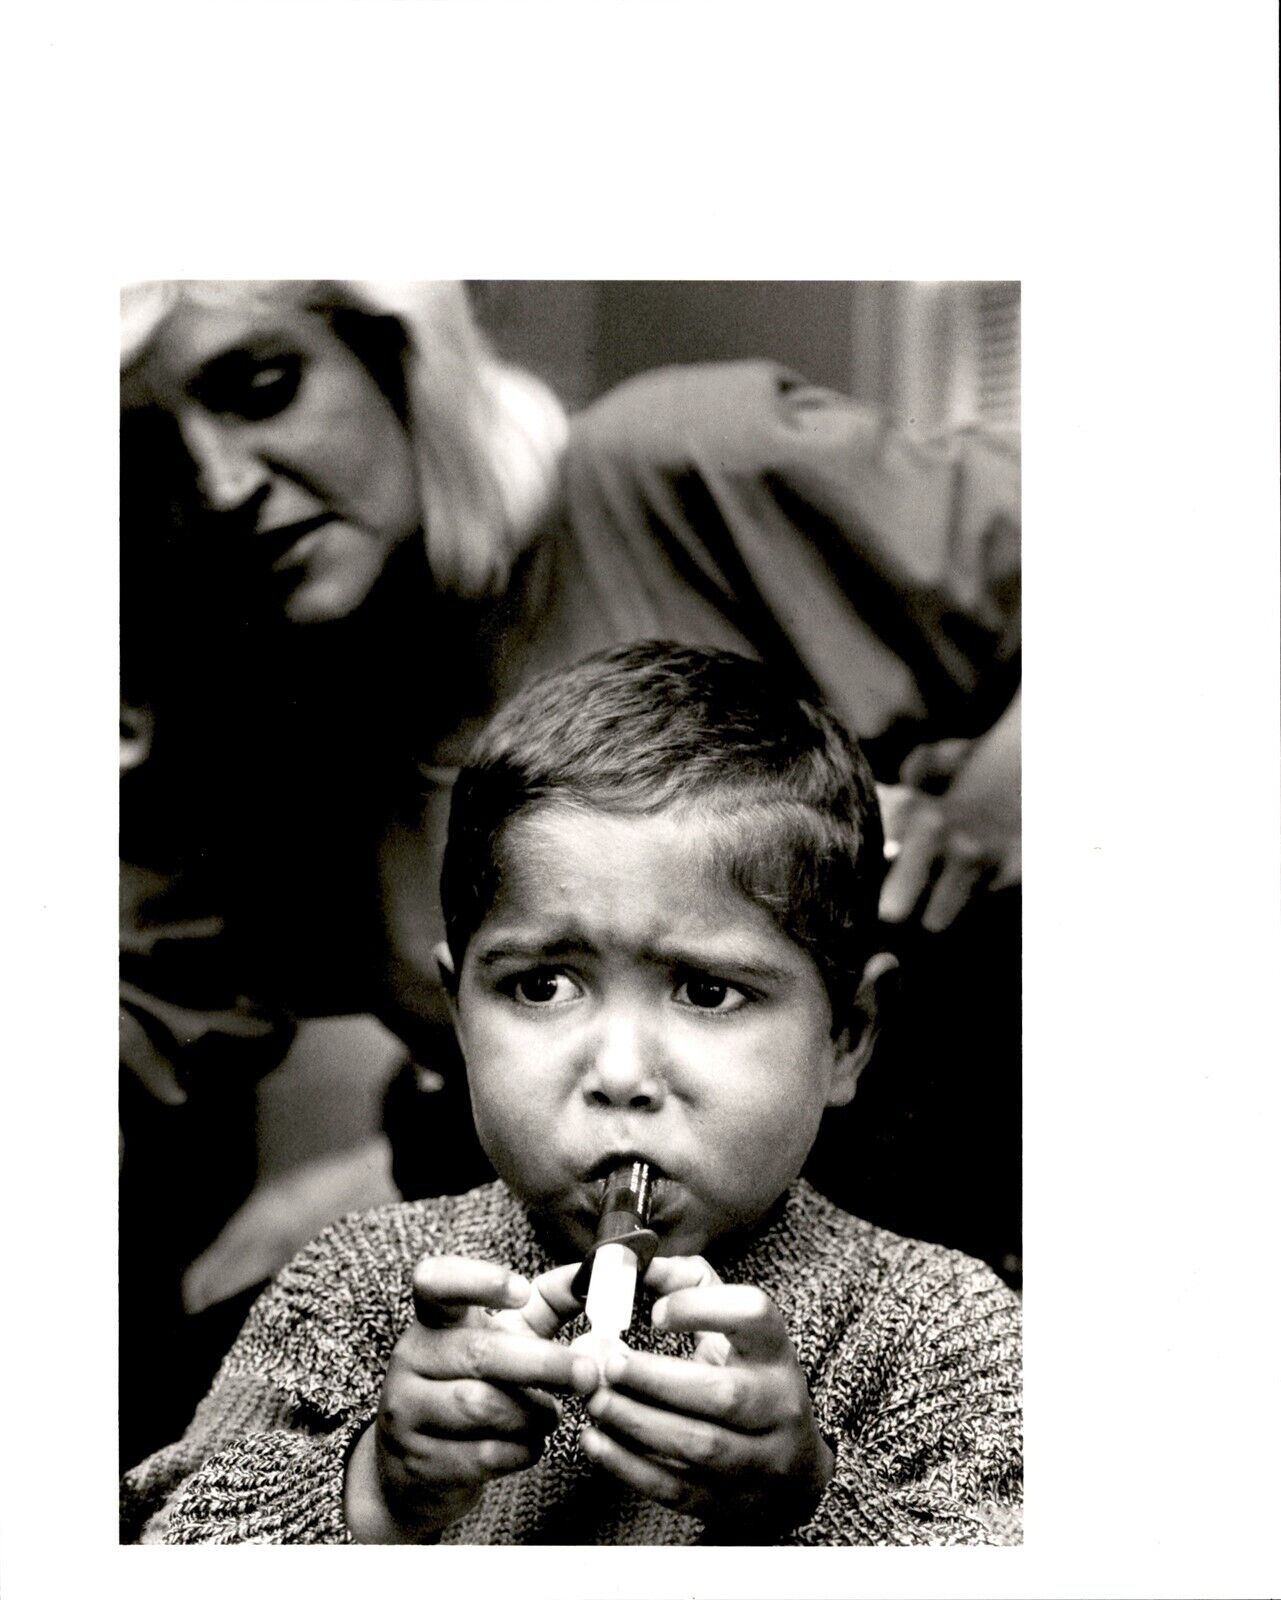 LG24 1991 Orig Photo CHILD VICTIM OF AIDS CRISIS TAKES HIS AZT RETROVIR MEDICINE